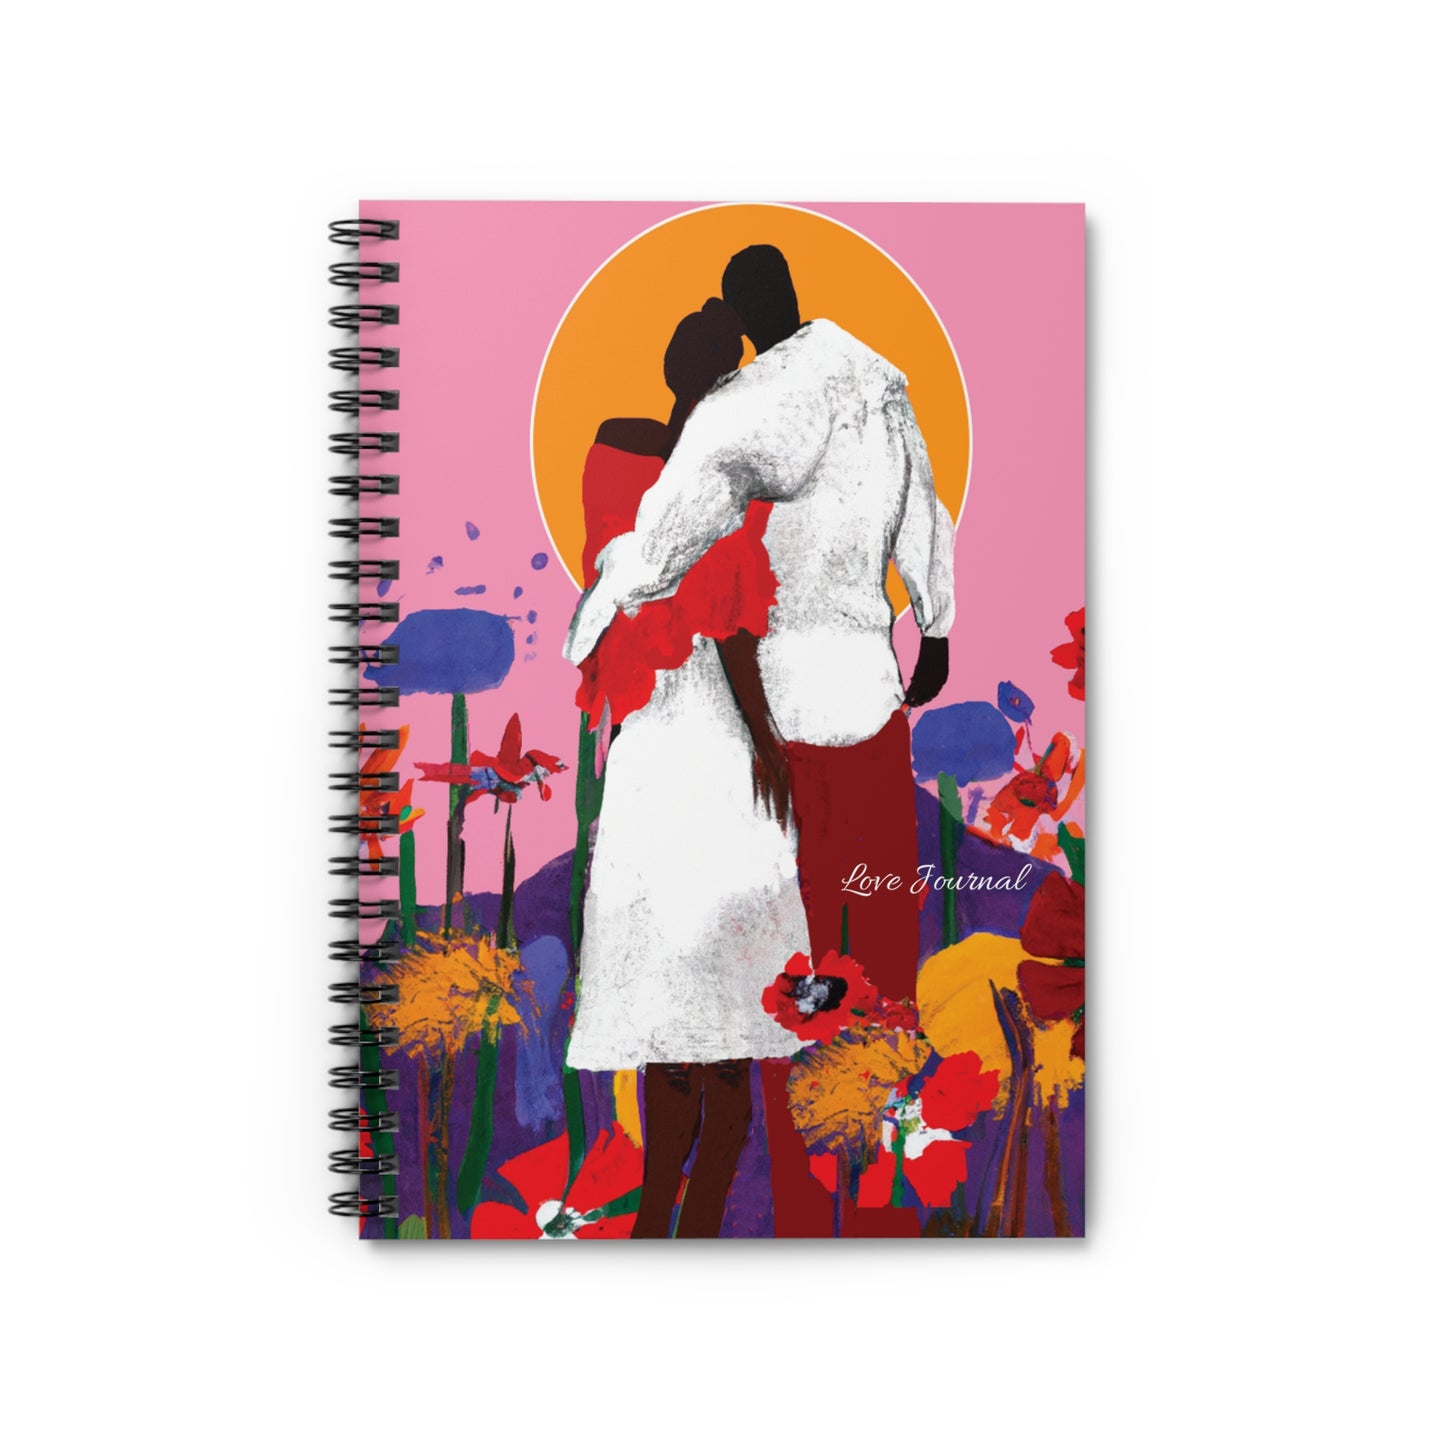 As - A Love Journal